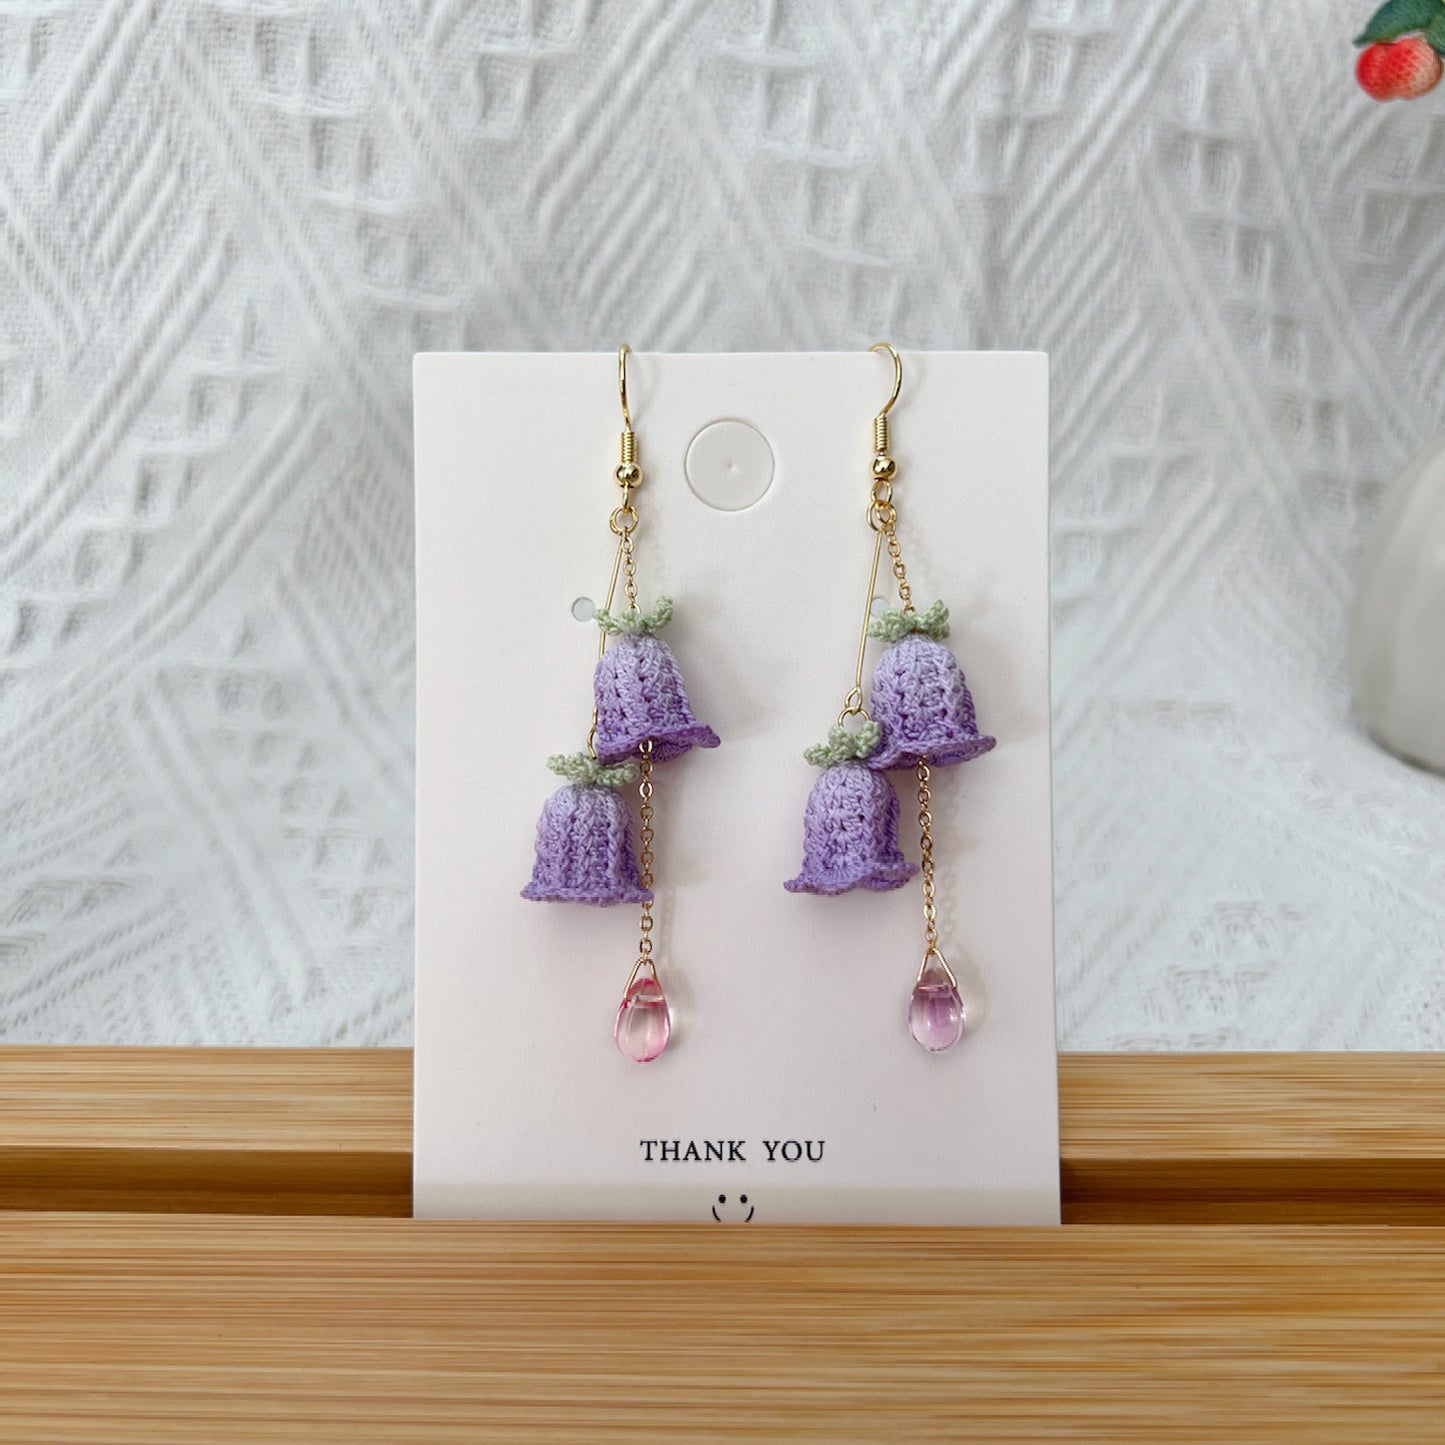 Micro Crochet Earrings | Bell Dangle | Handmade Drop Earrings | Unique Gift for Her